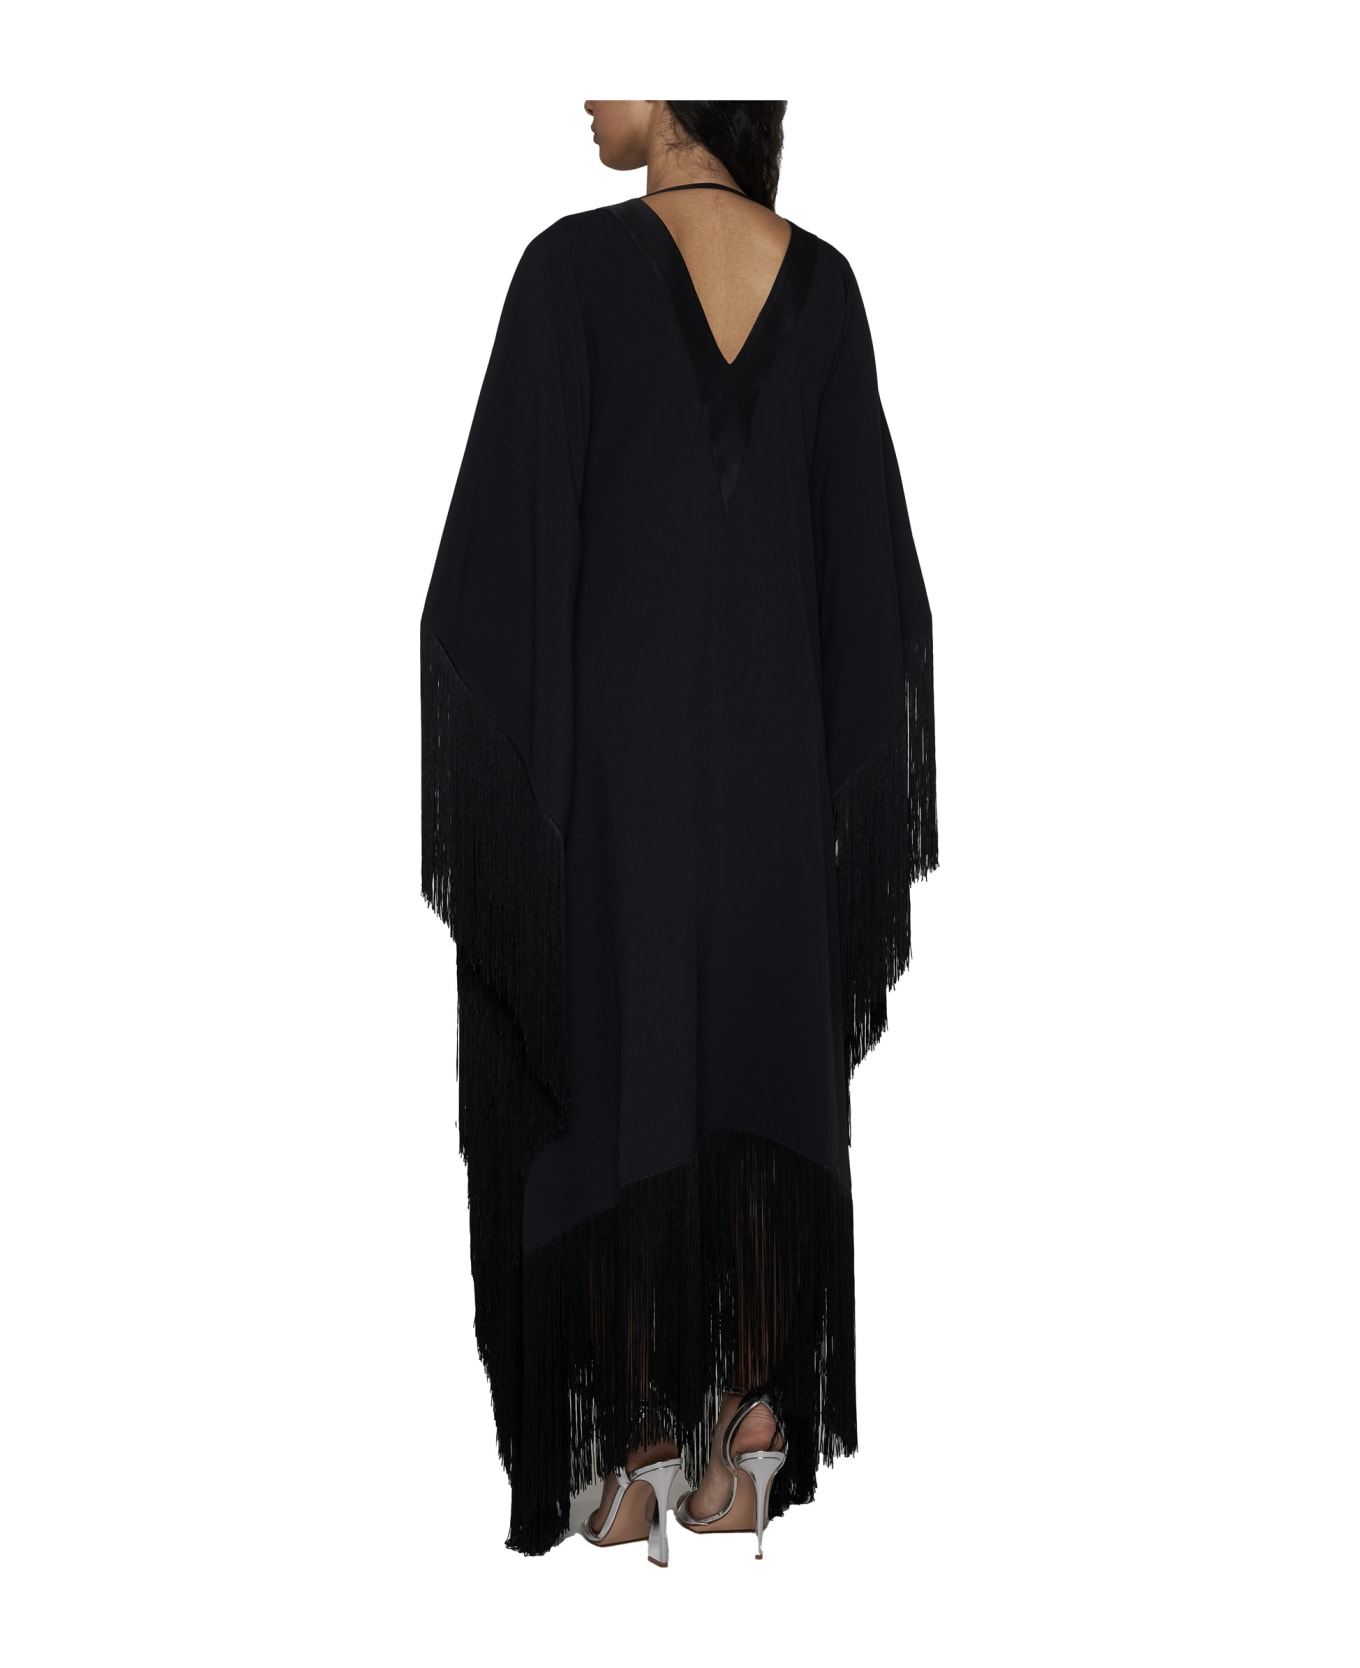 Taller Marmo Dress - Black